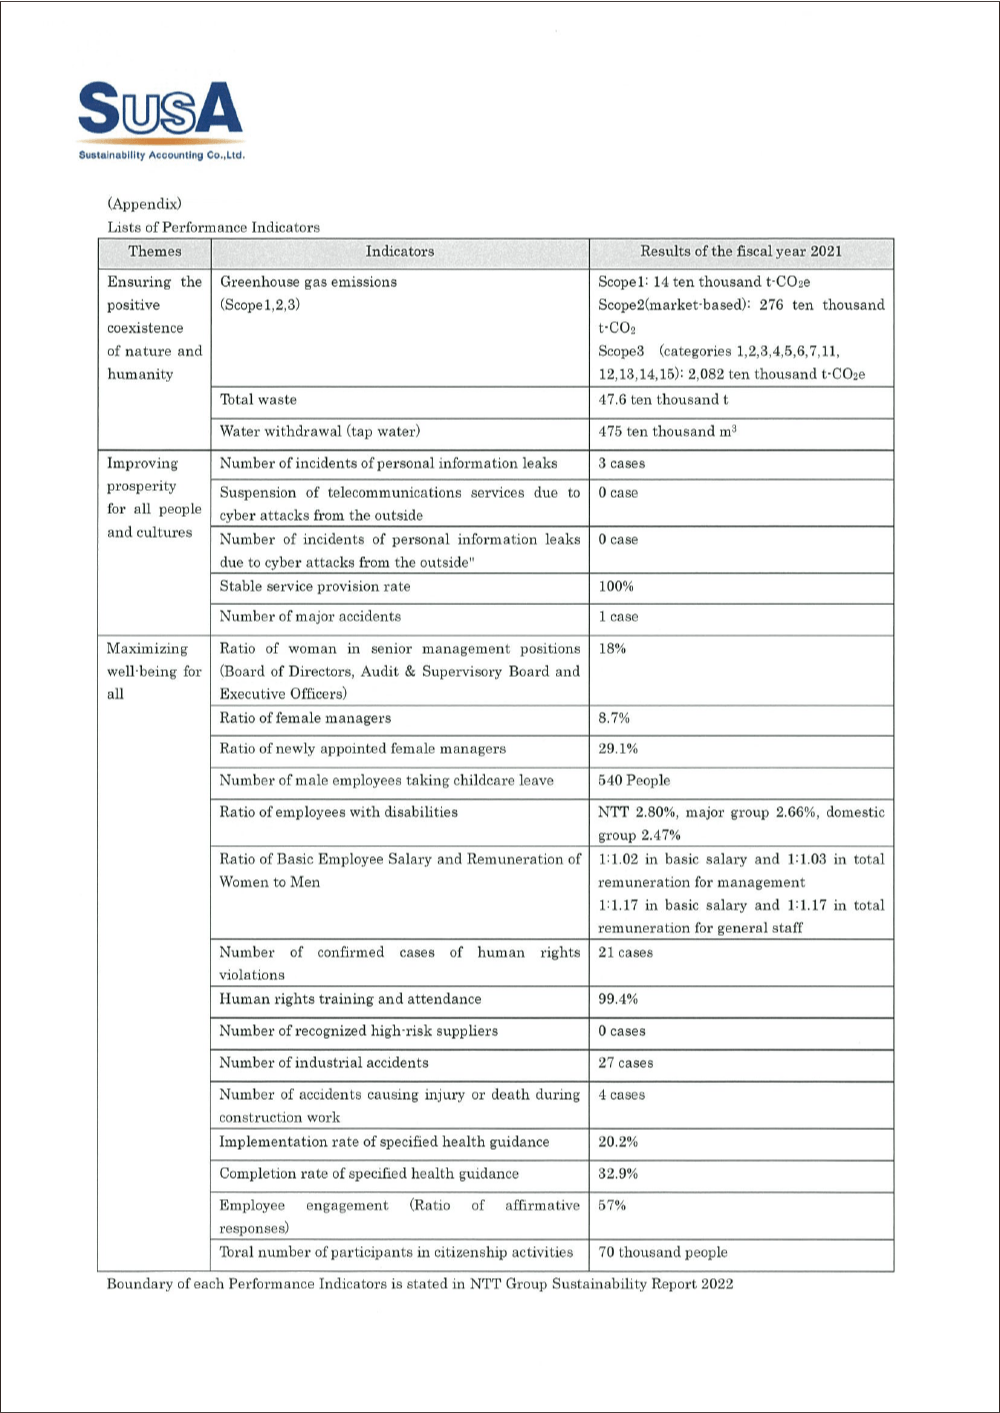 Lists of Performance Indicators